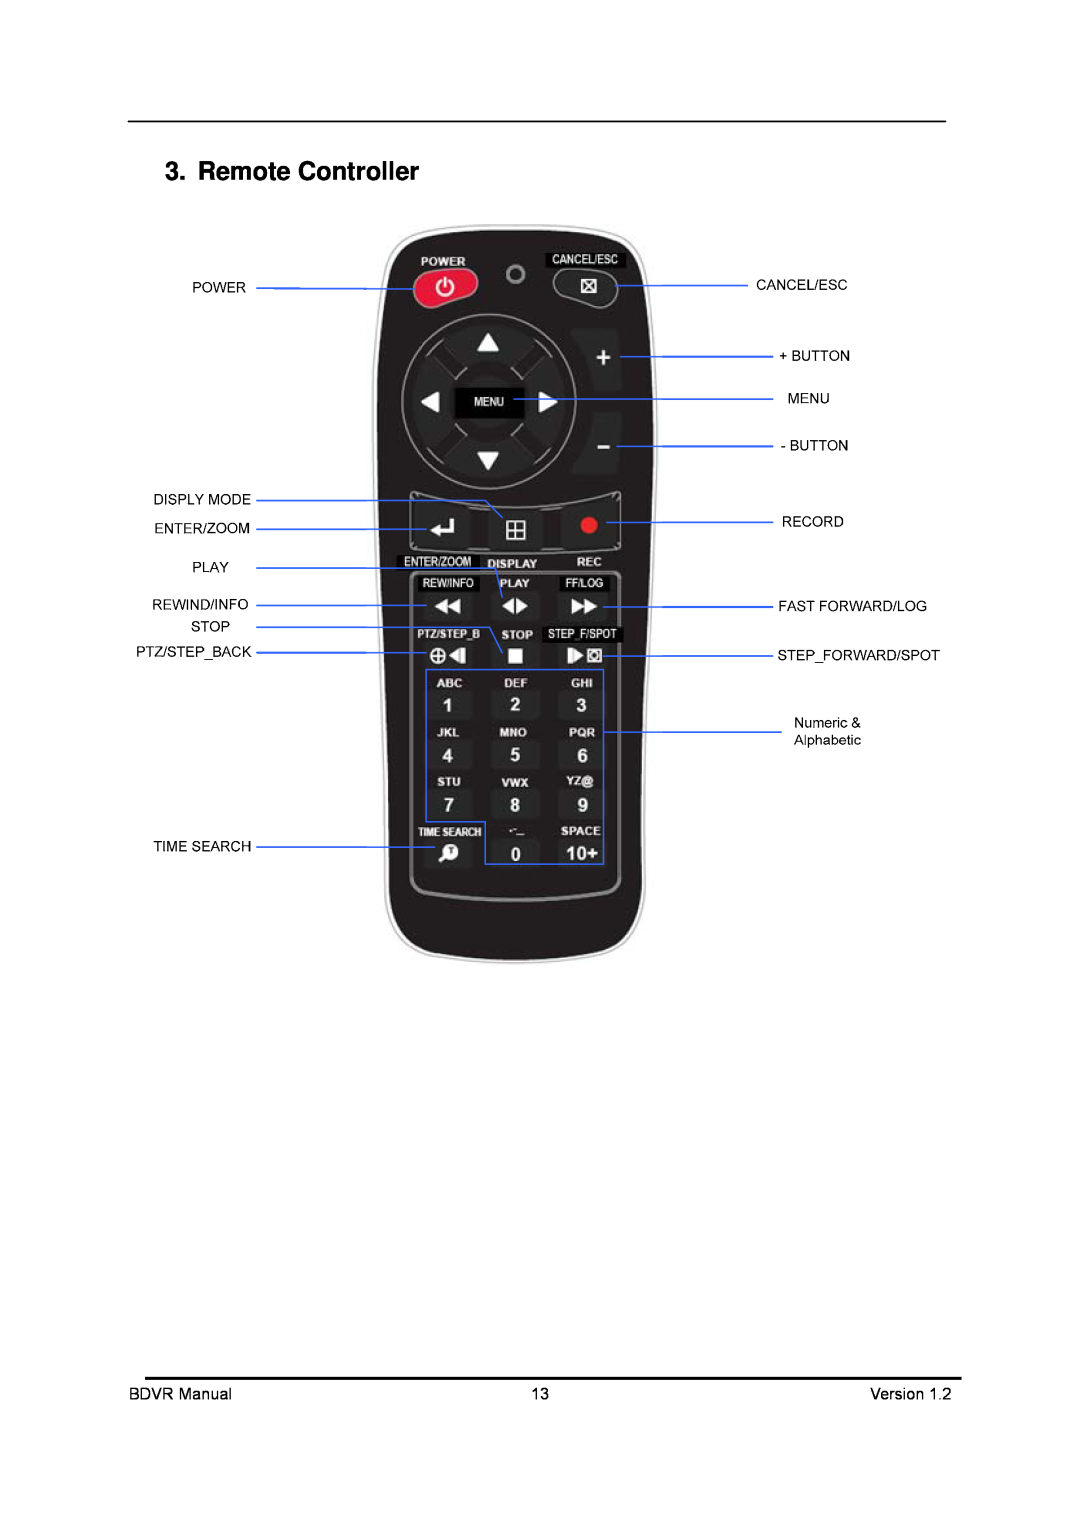 Genie BDVR-4, BDVR-8, BDVR-16 manual Remote Controller, BDVR Manual 